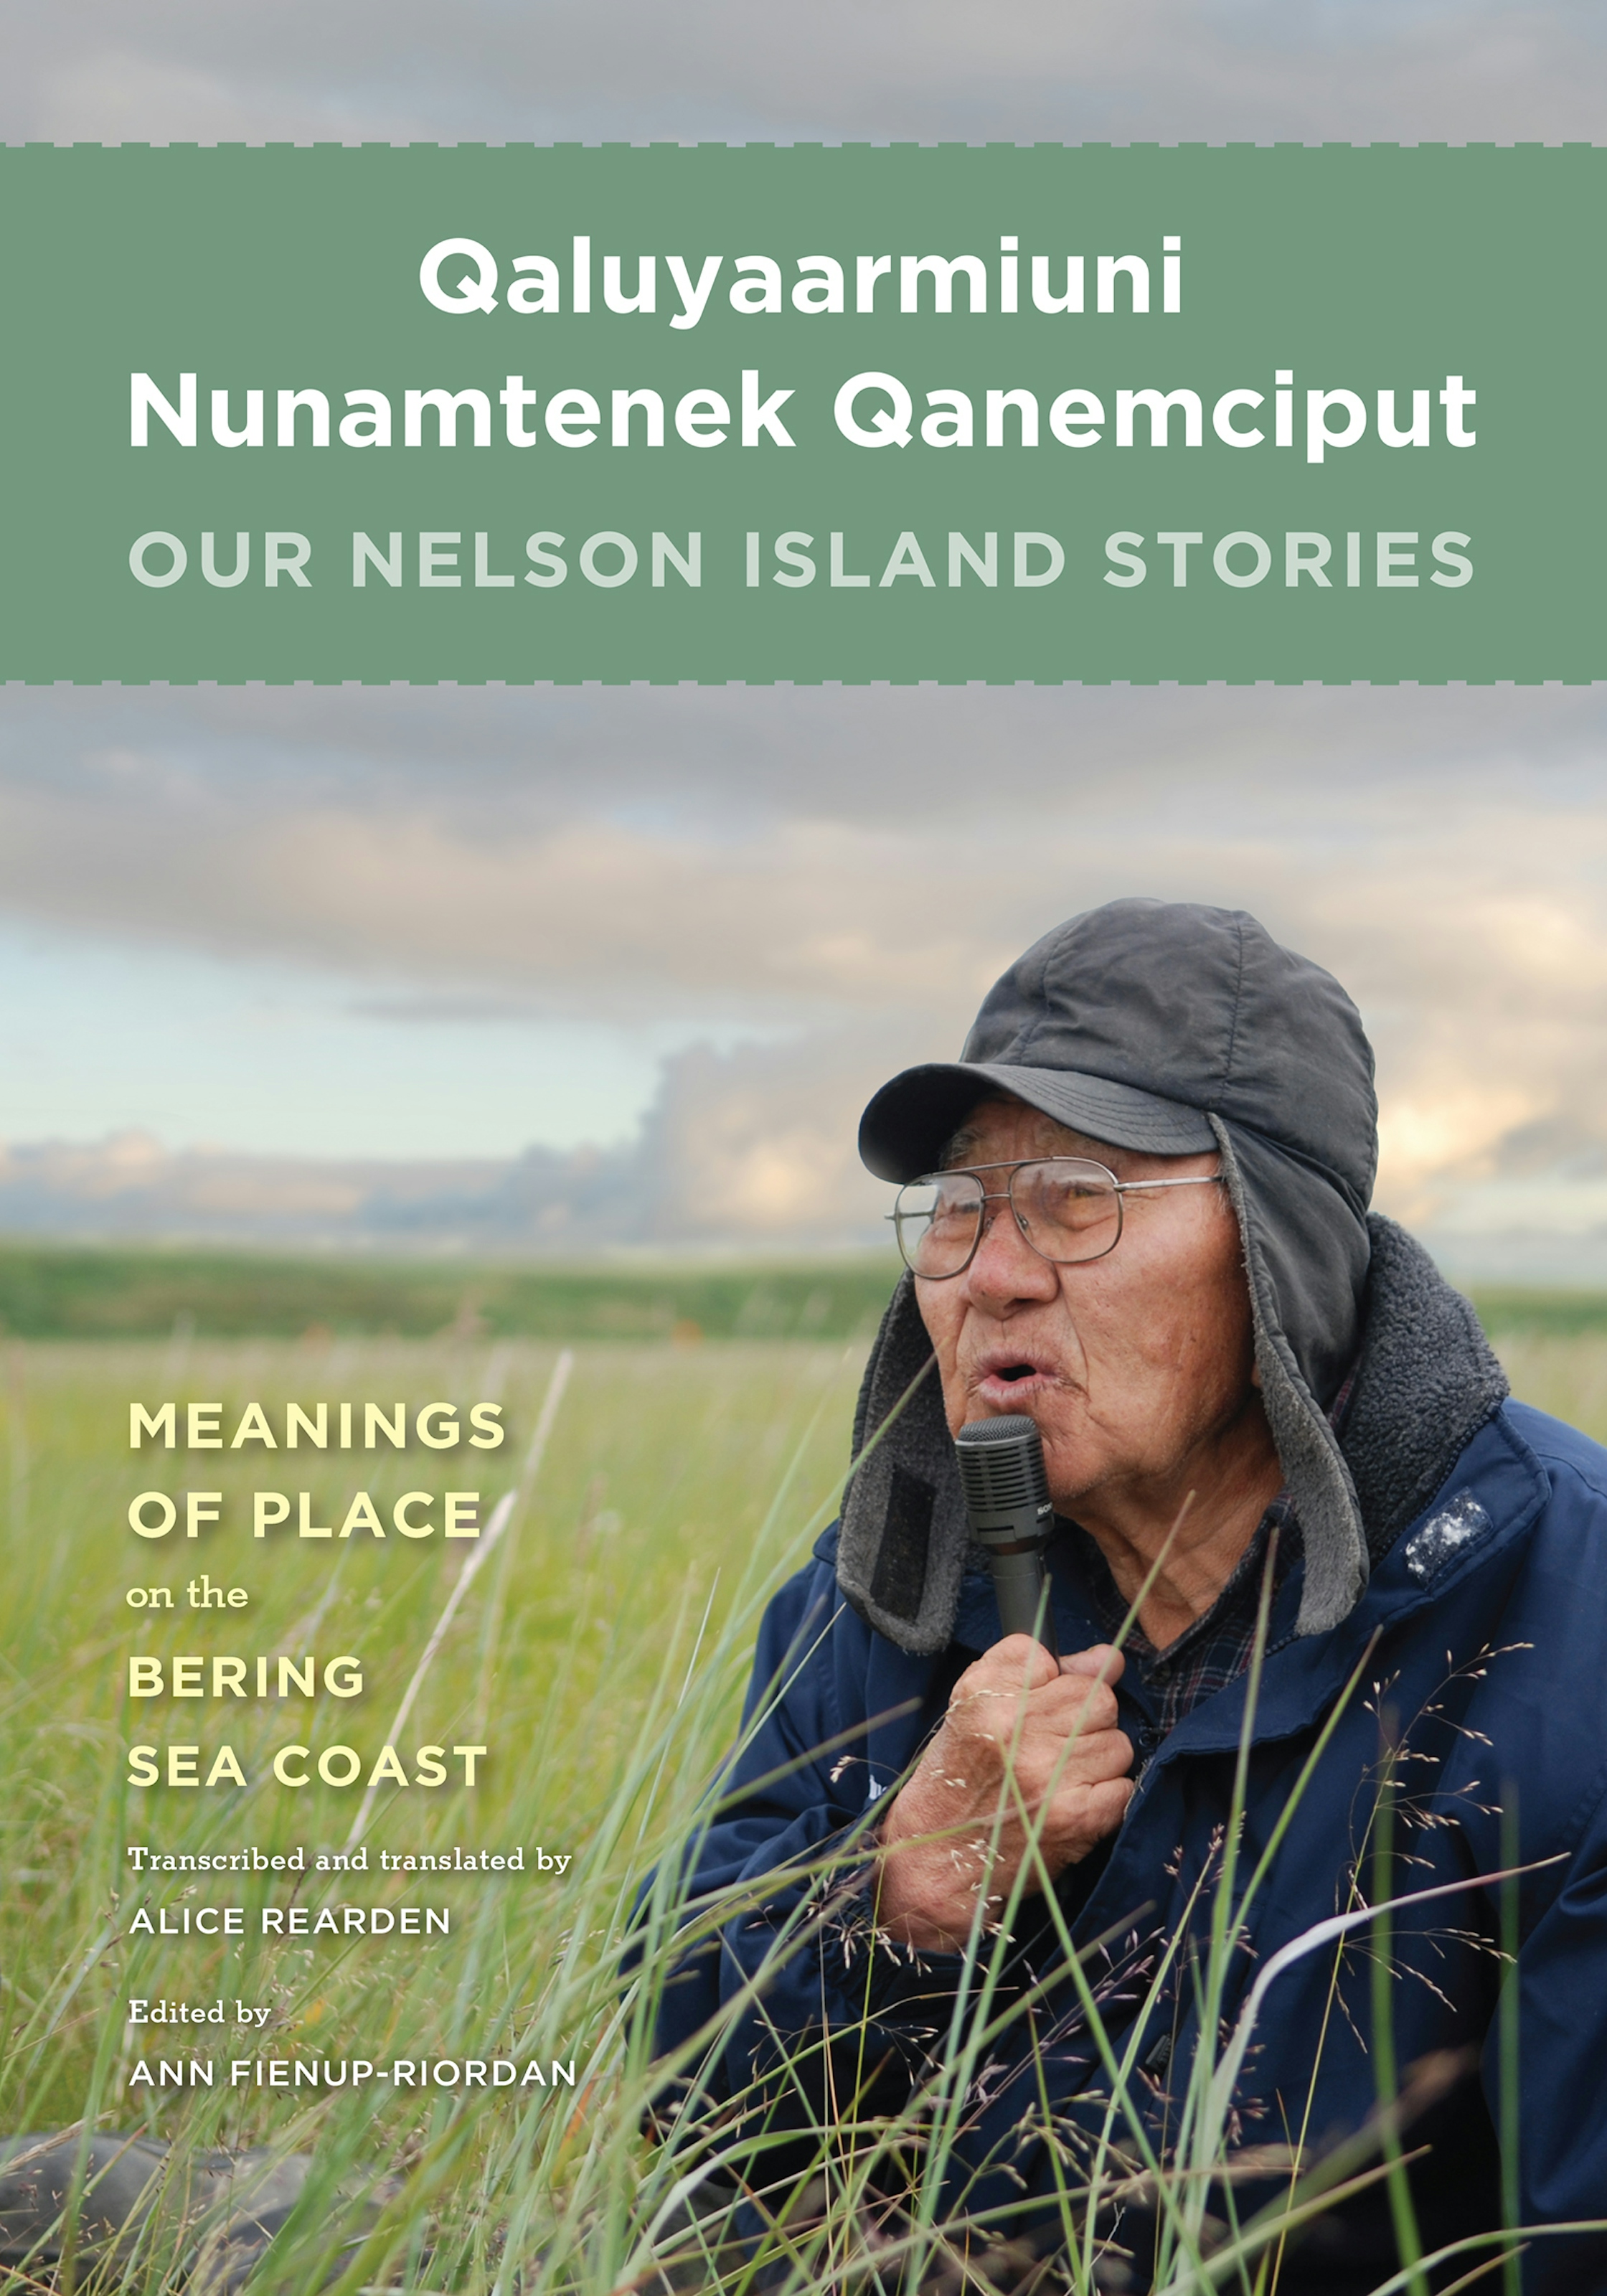 Qaluyaarmiuni Nunamtenek Qanemciput / Our Nelson Island Stories